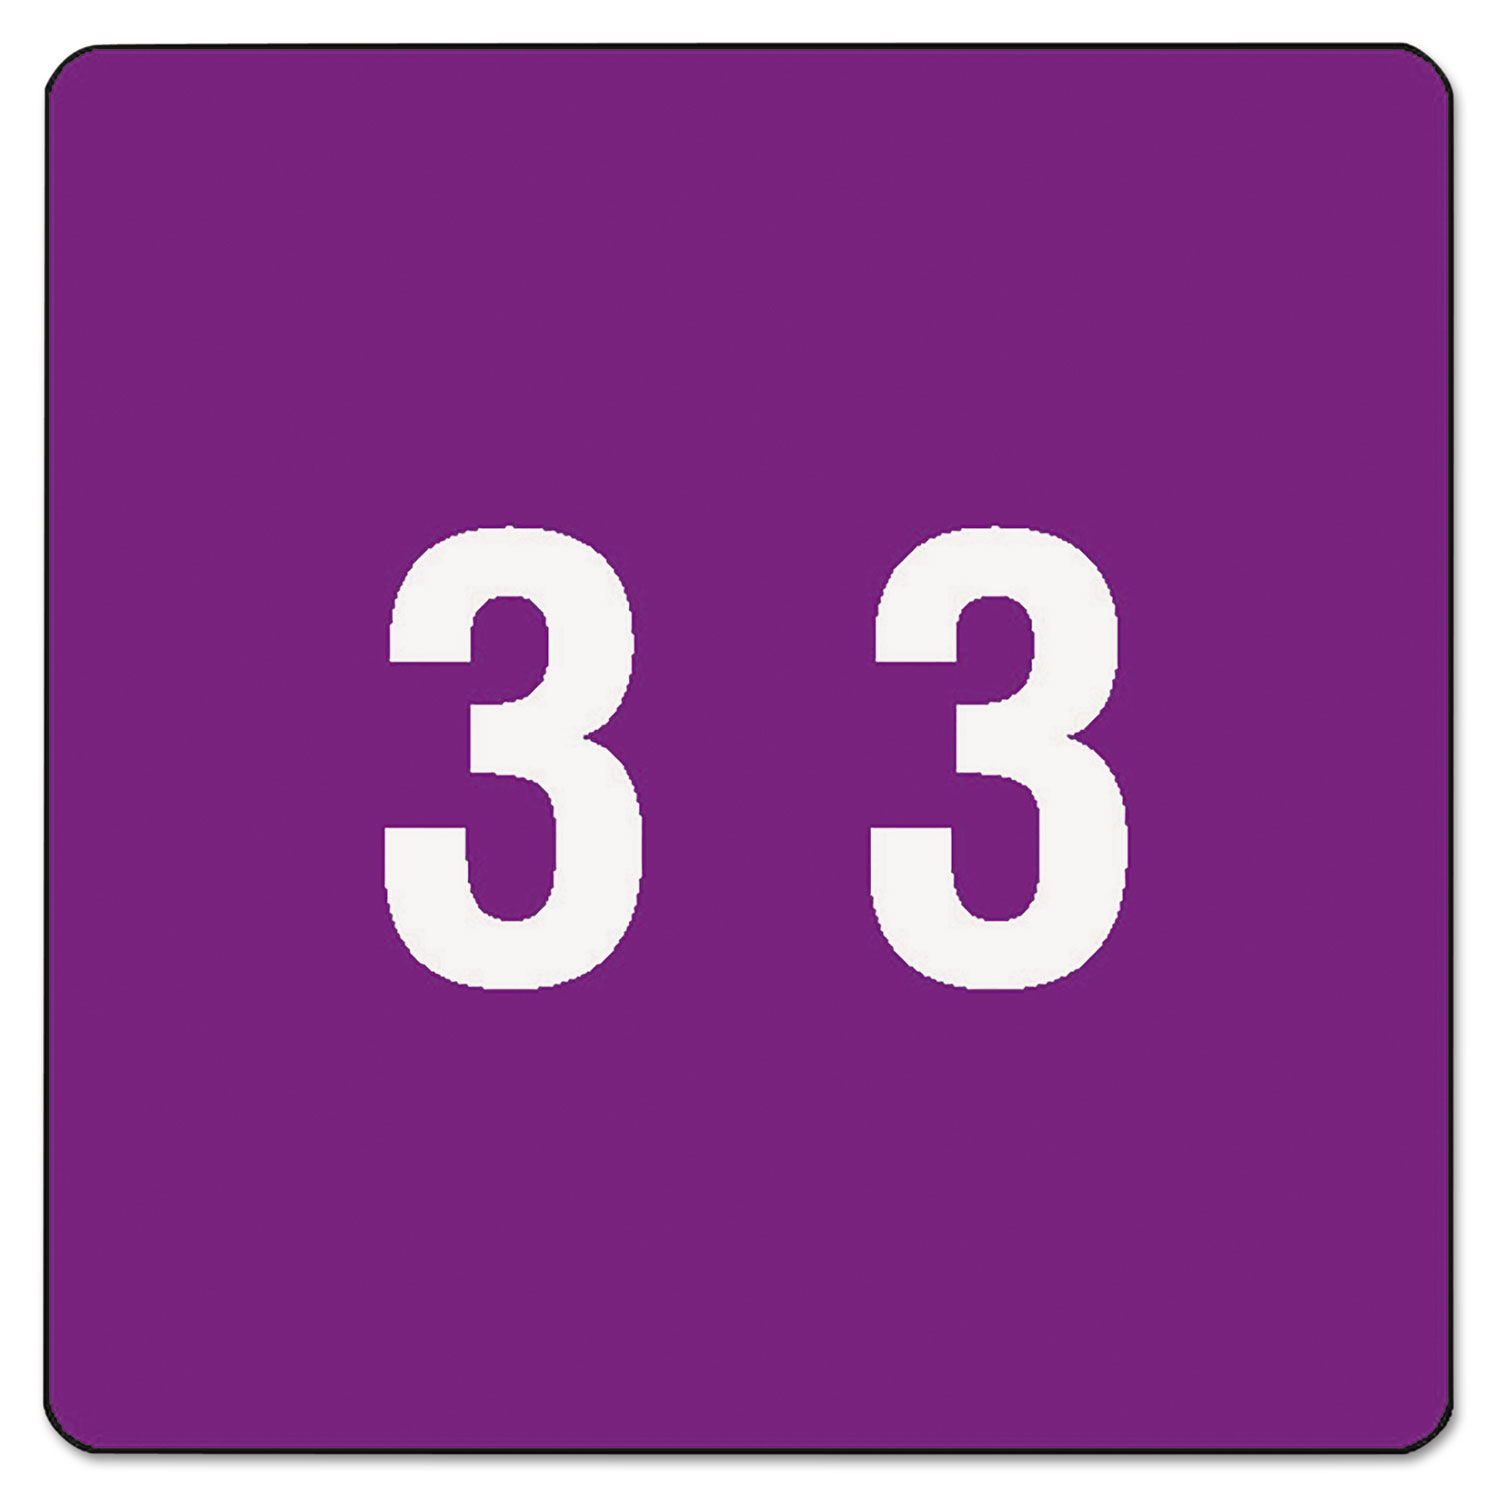  Smead 67423 Numerical End Tab File Folder Labels, 3, 1.5 x 1.5, Purple, 250/Roll (SMD67423) 